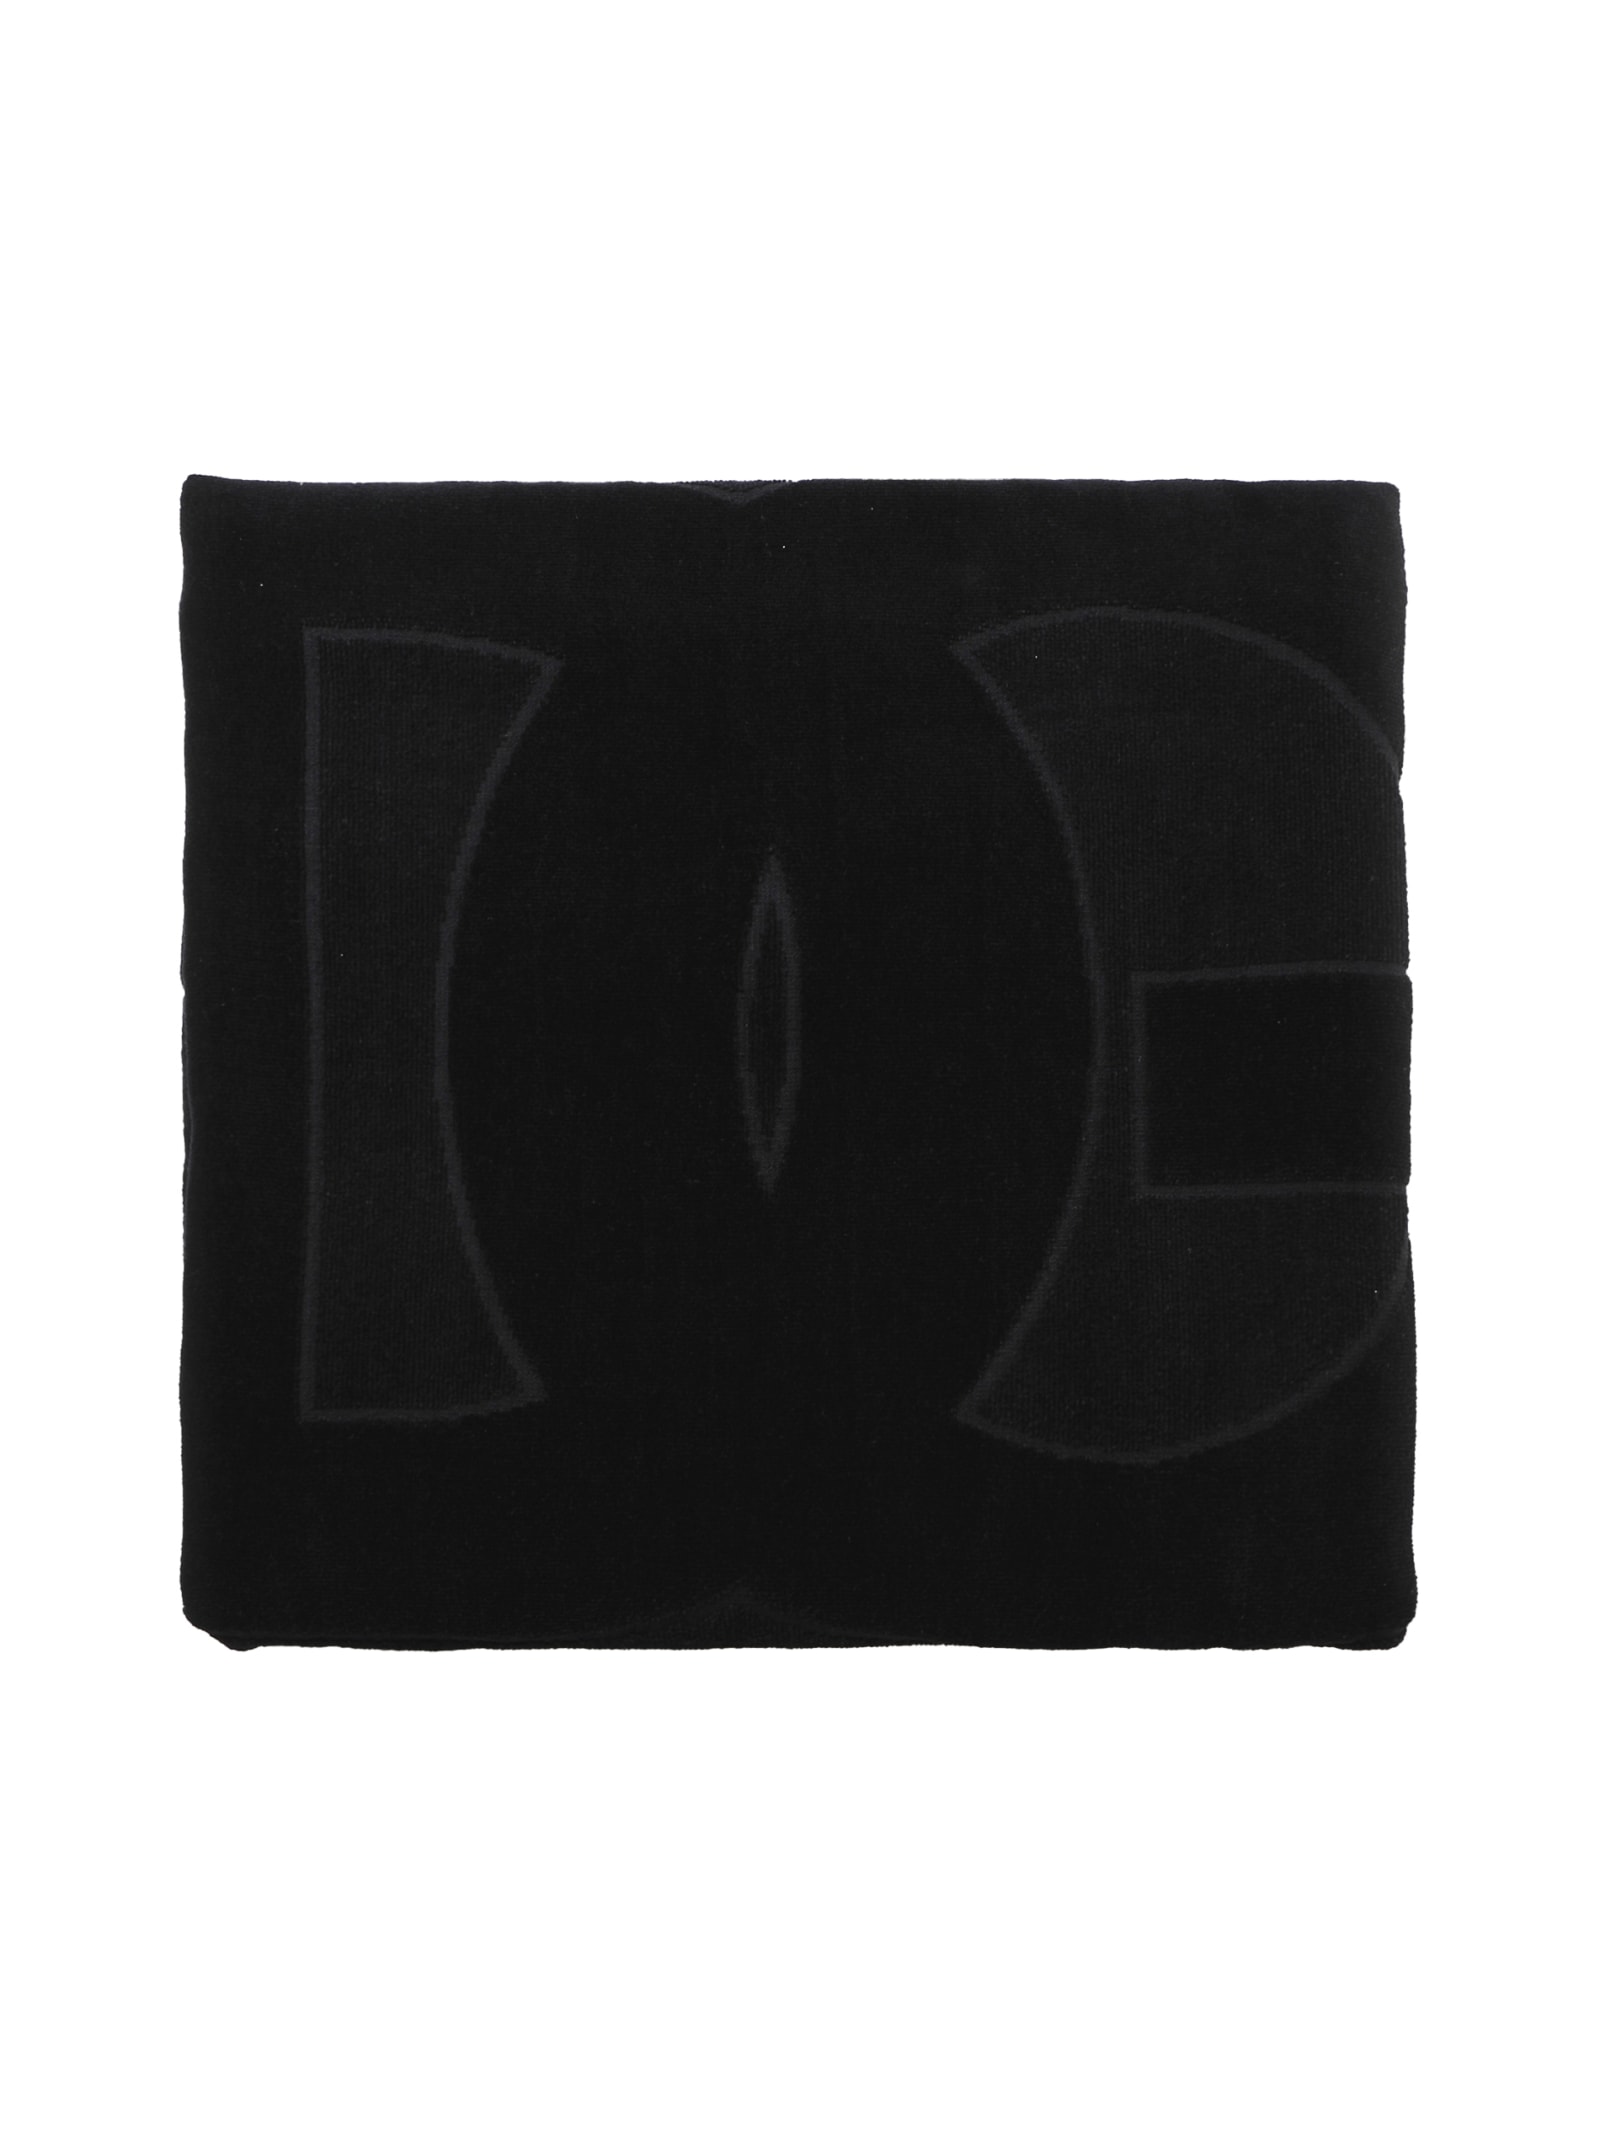 Dolce & Gabbana Dg Monogram Jacquard Cotton Beach Towel